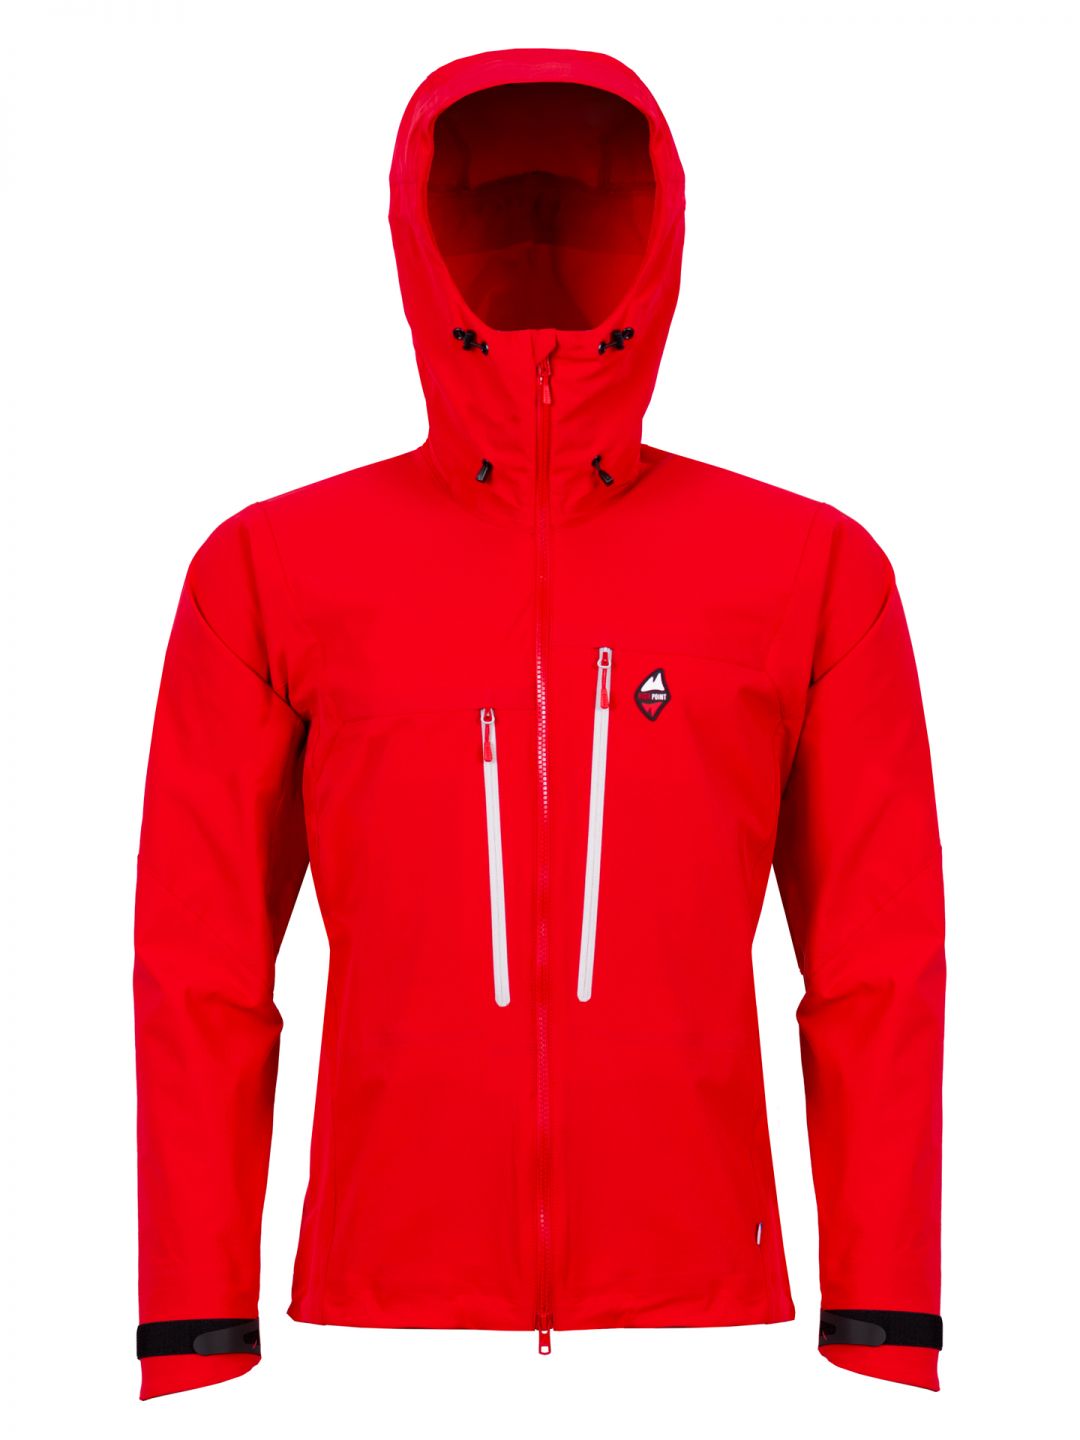 HIGH POINT NUROCK jacket red varianta: XL